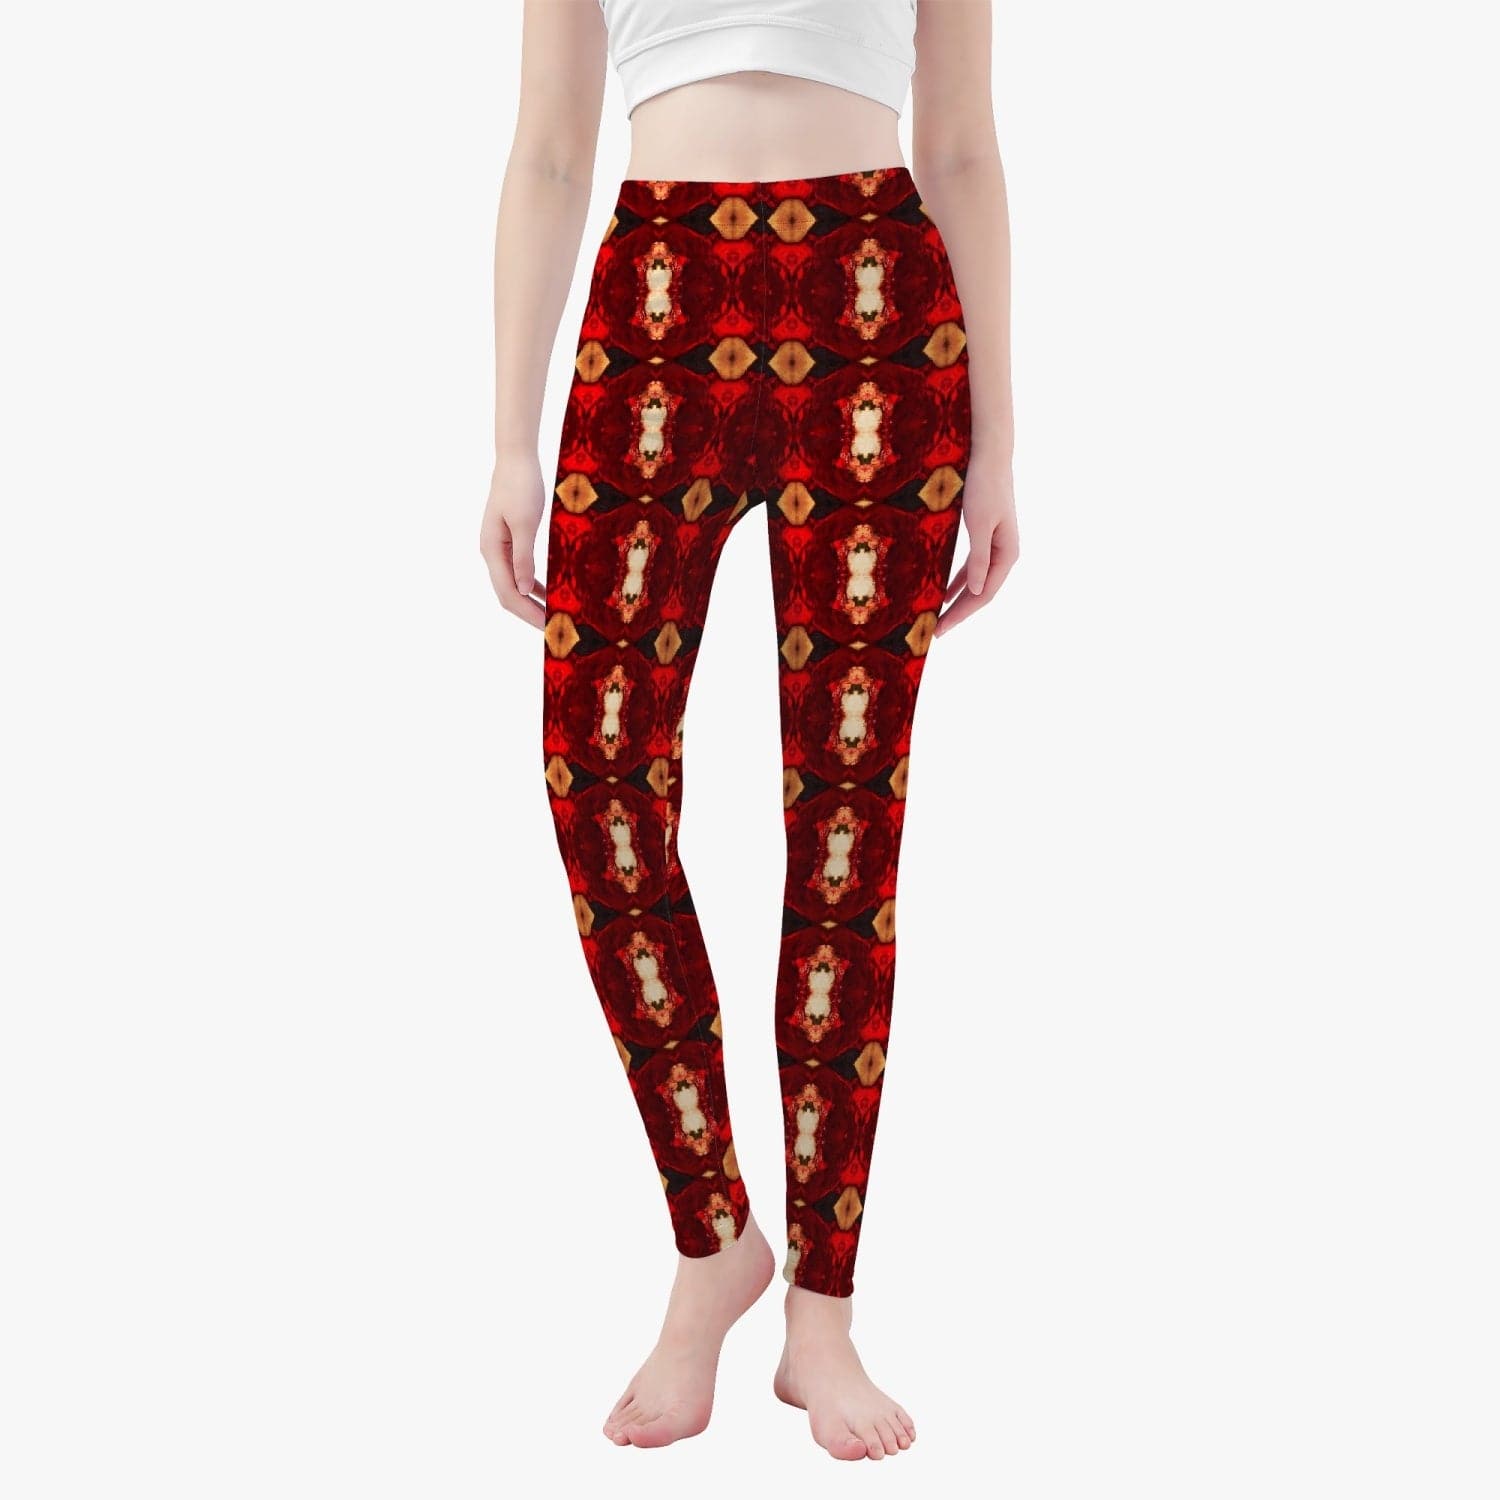 Active Red Black and White Yoga Pants/Leggings, by Sensus Studio Design